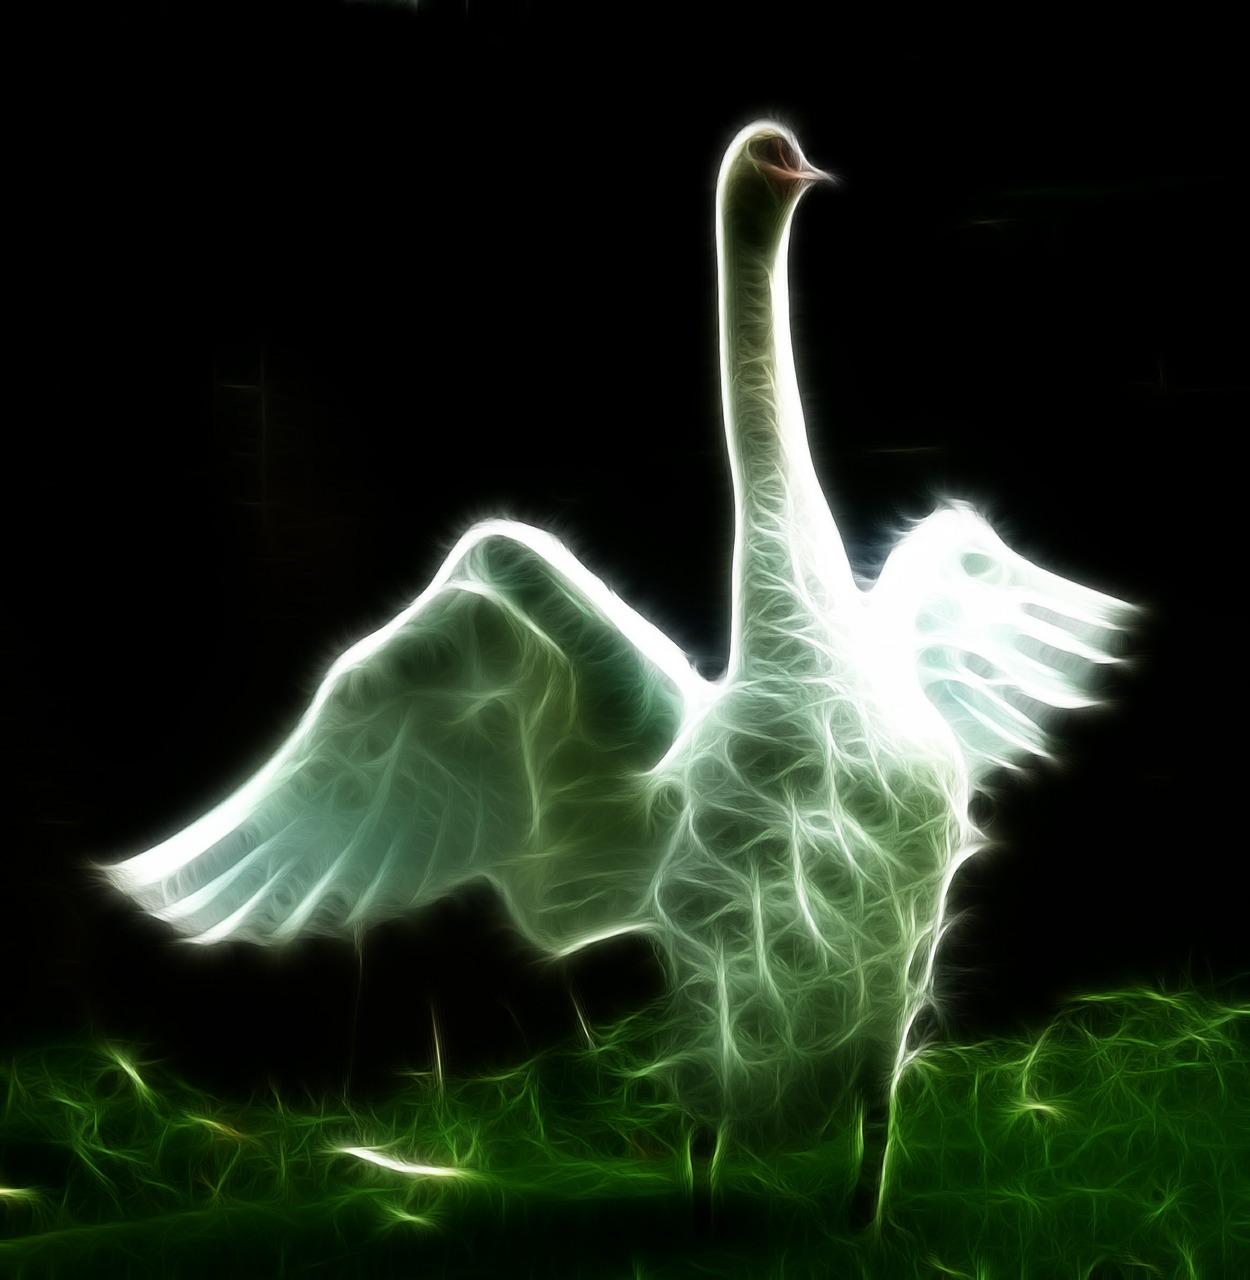 swan image editing image editing programs free photo